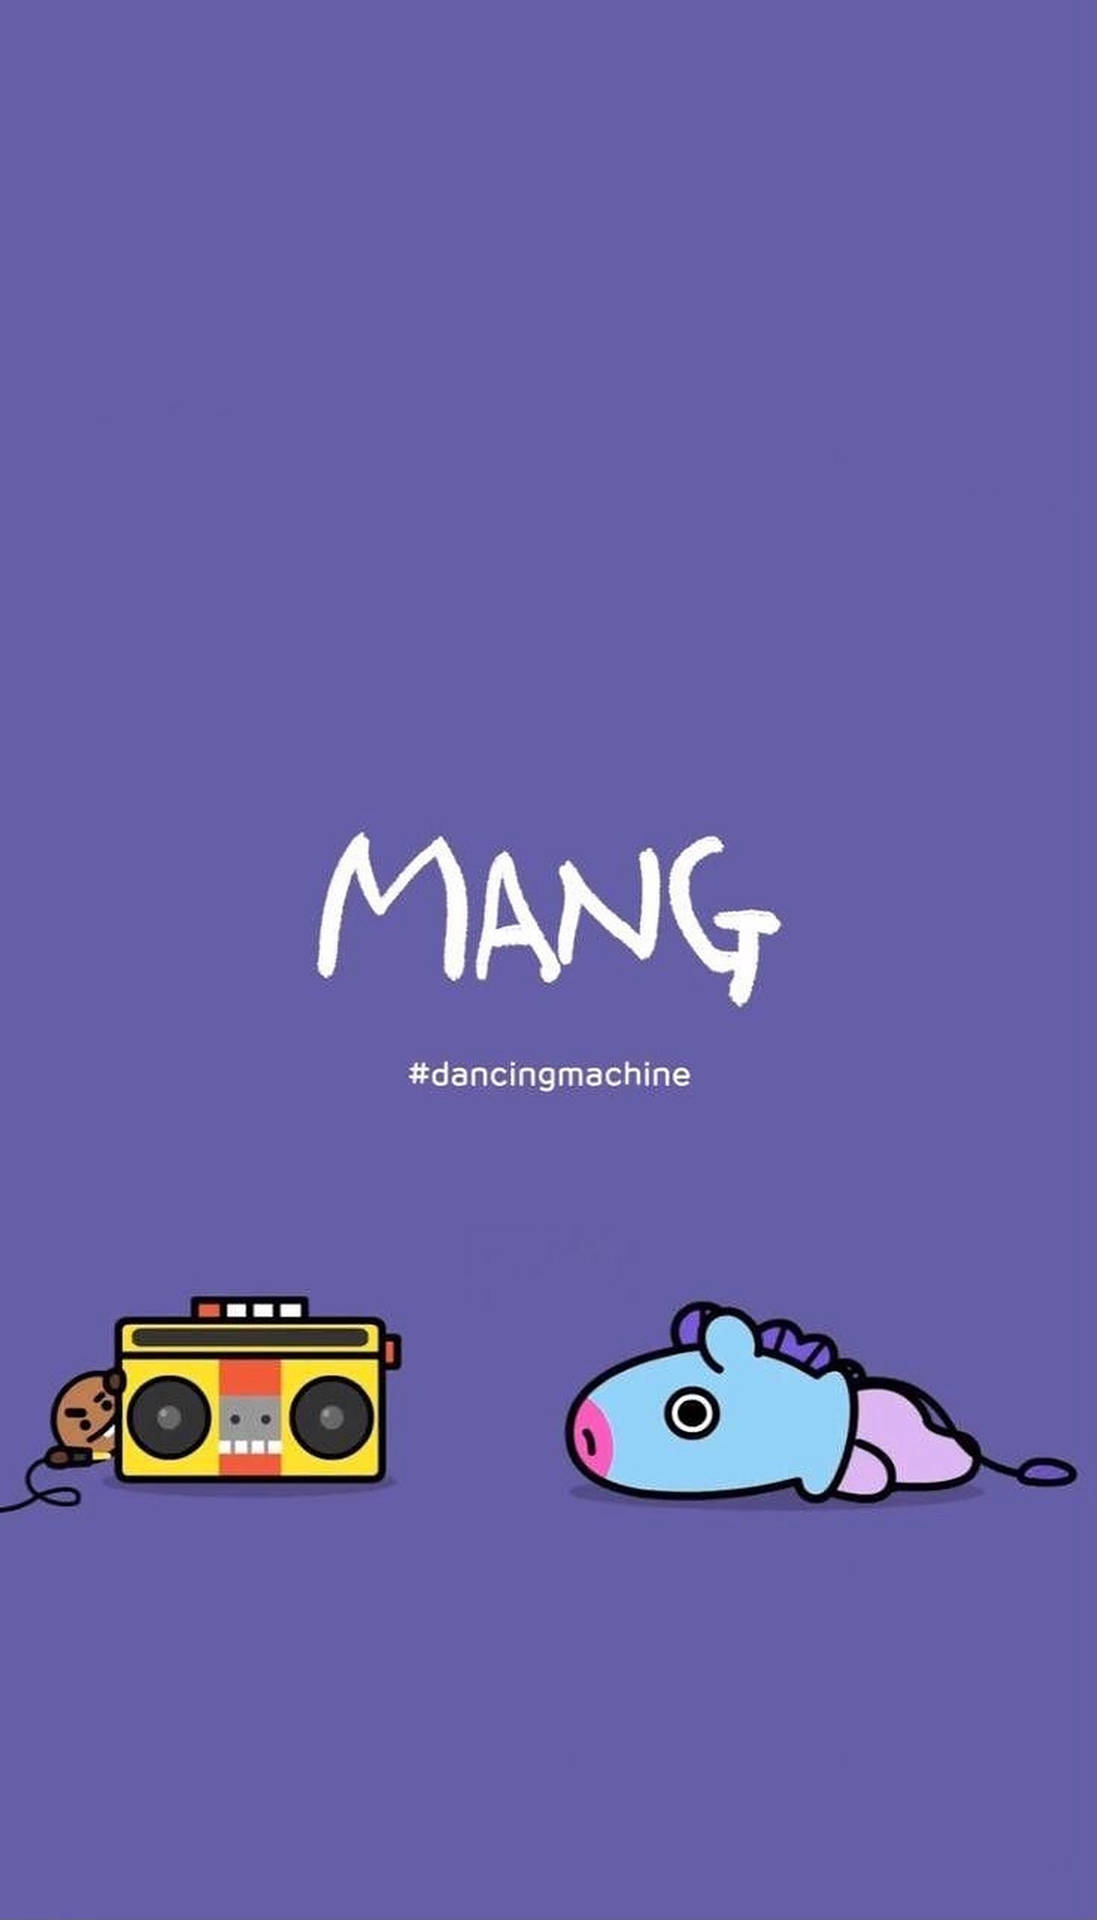 Mang Bt21 Dancing Machine